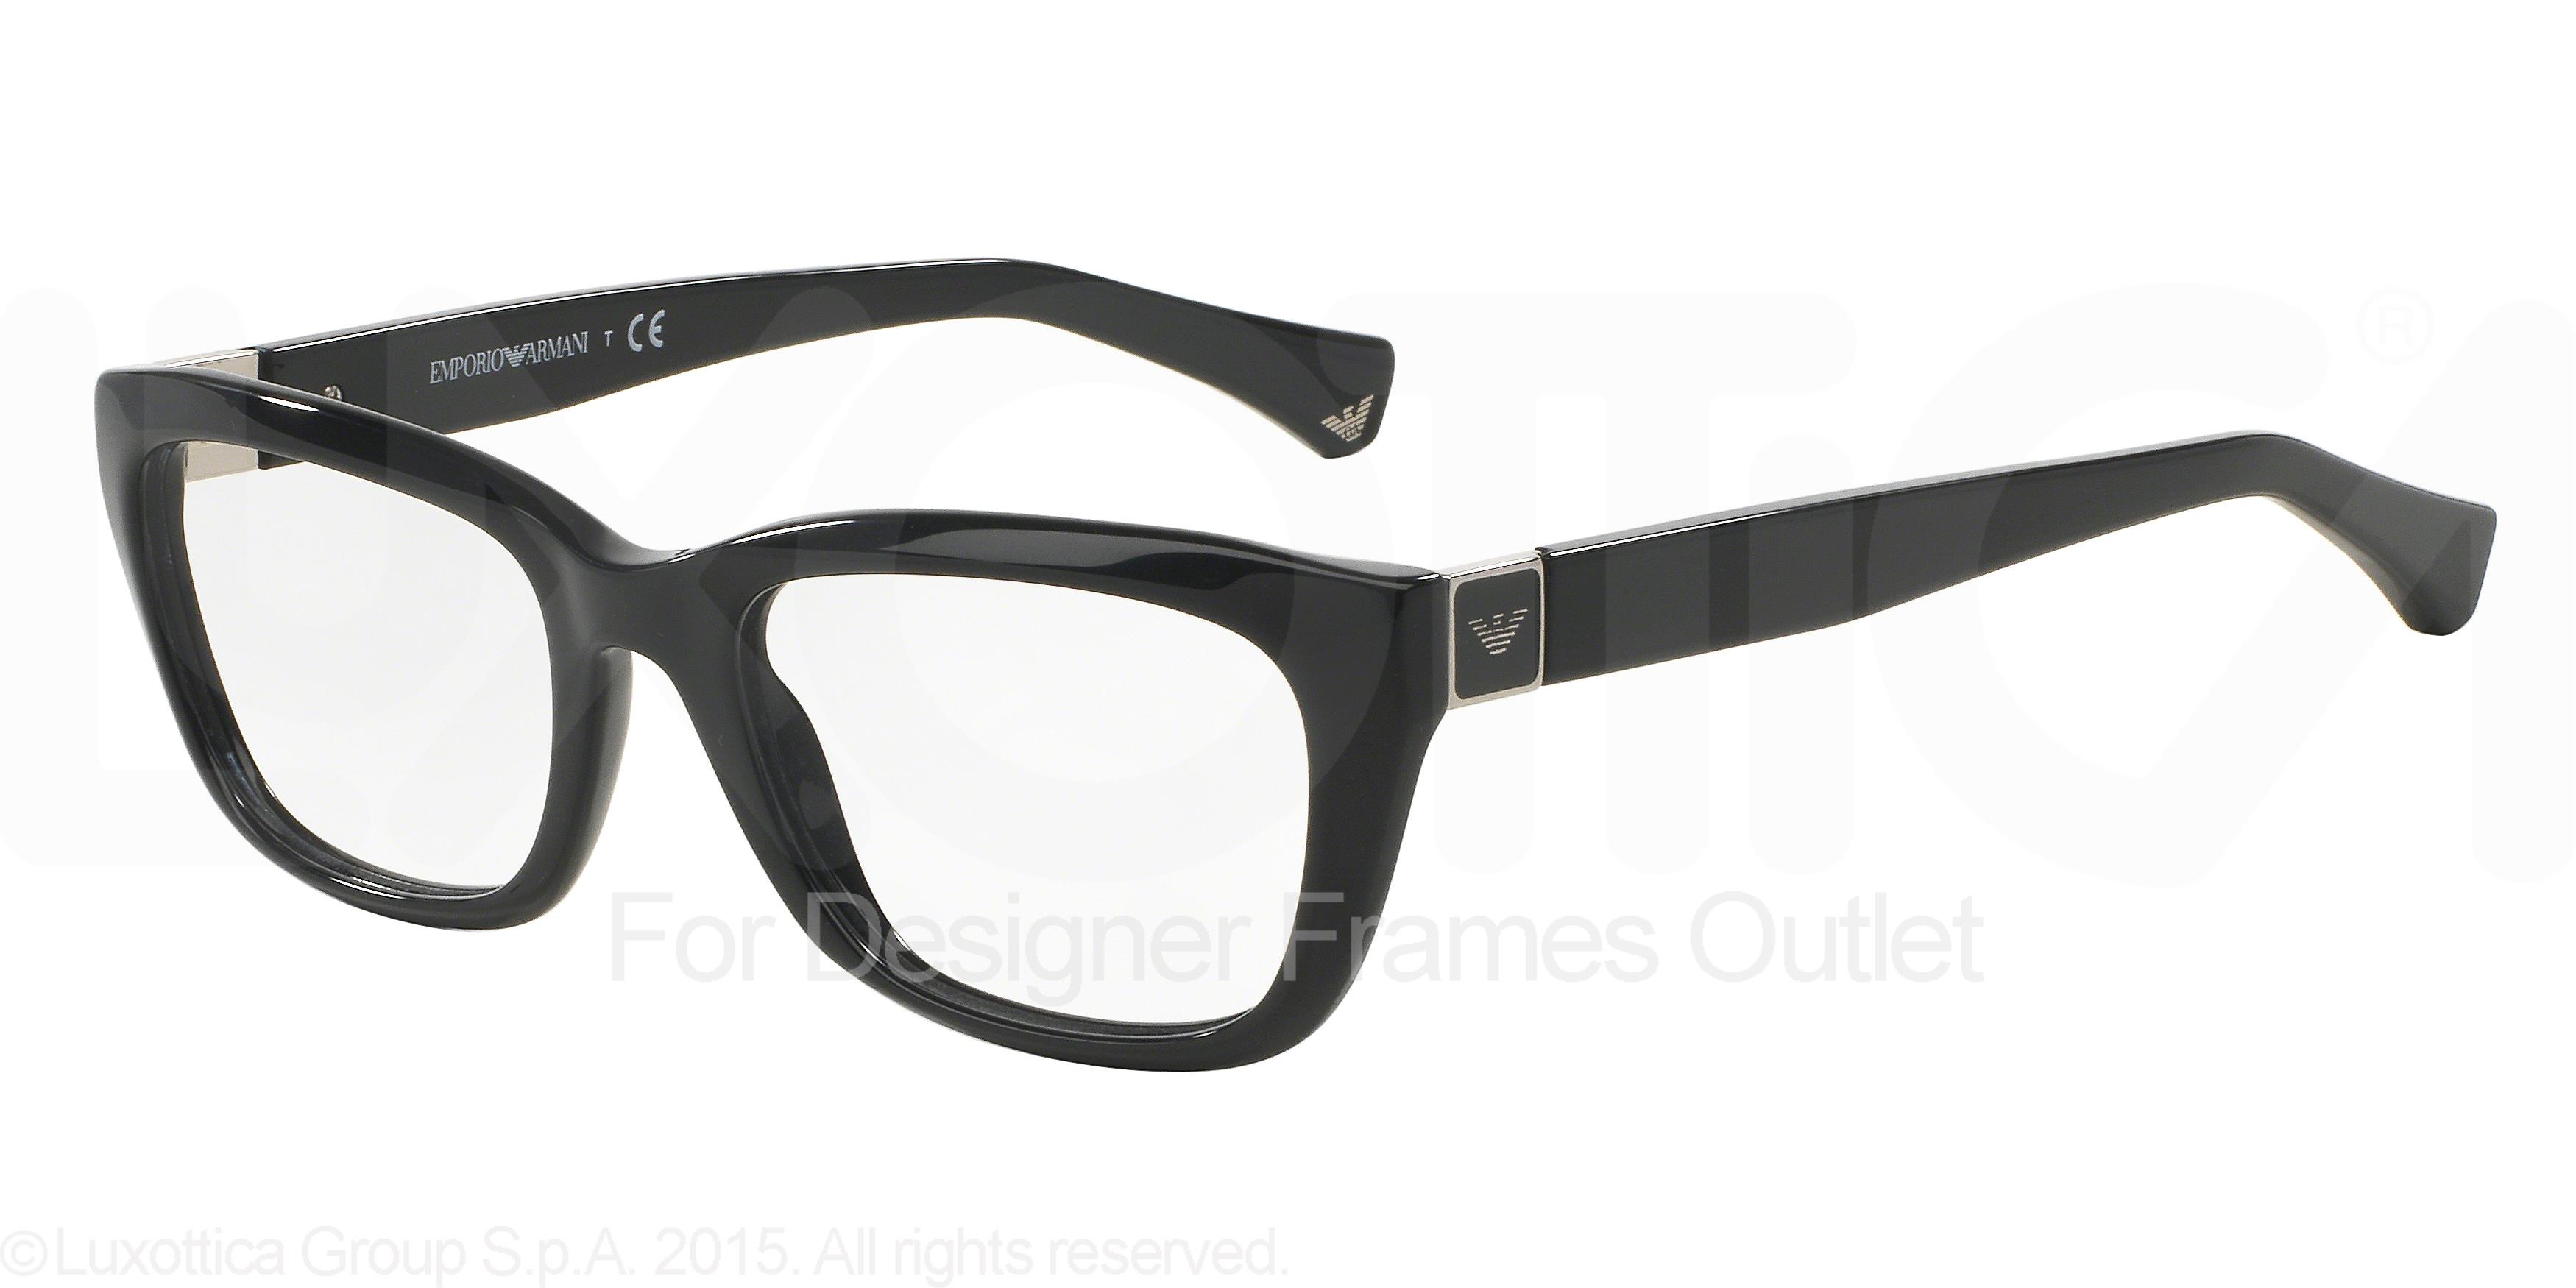 Picture of Emporio Armani Eyeglasses EA3058